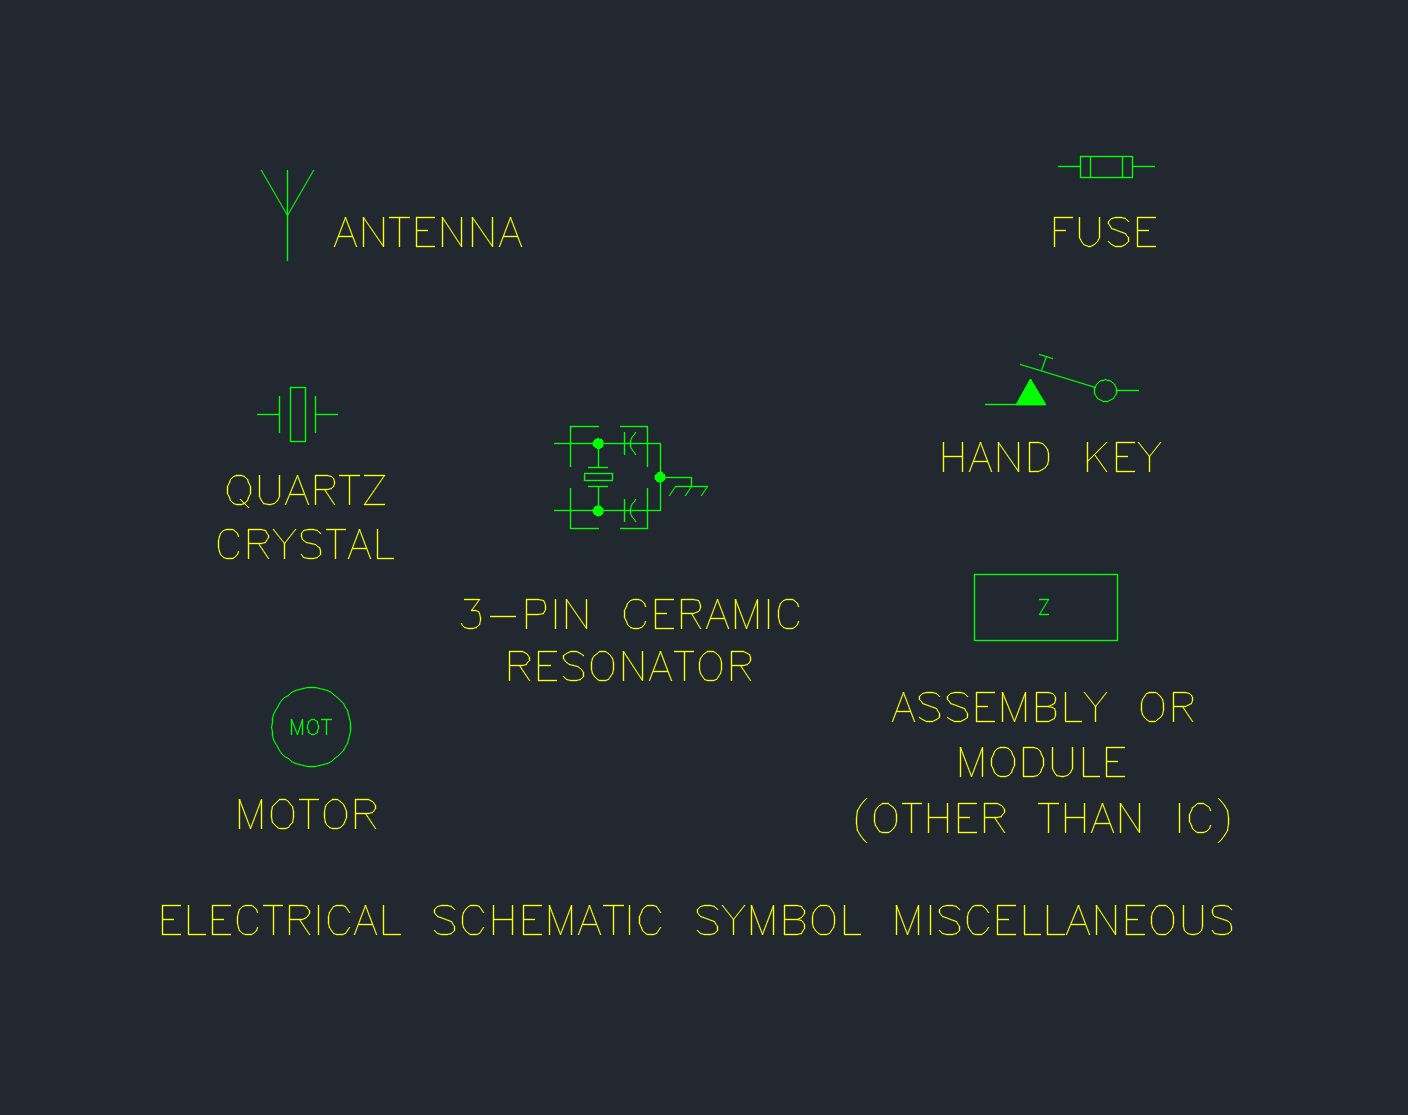 Schematic Miscellaneous Symbols